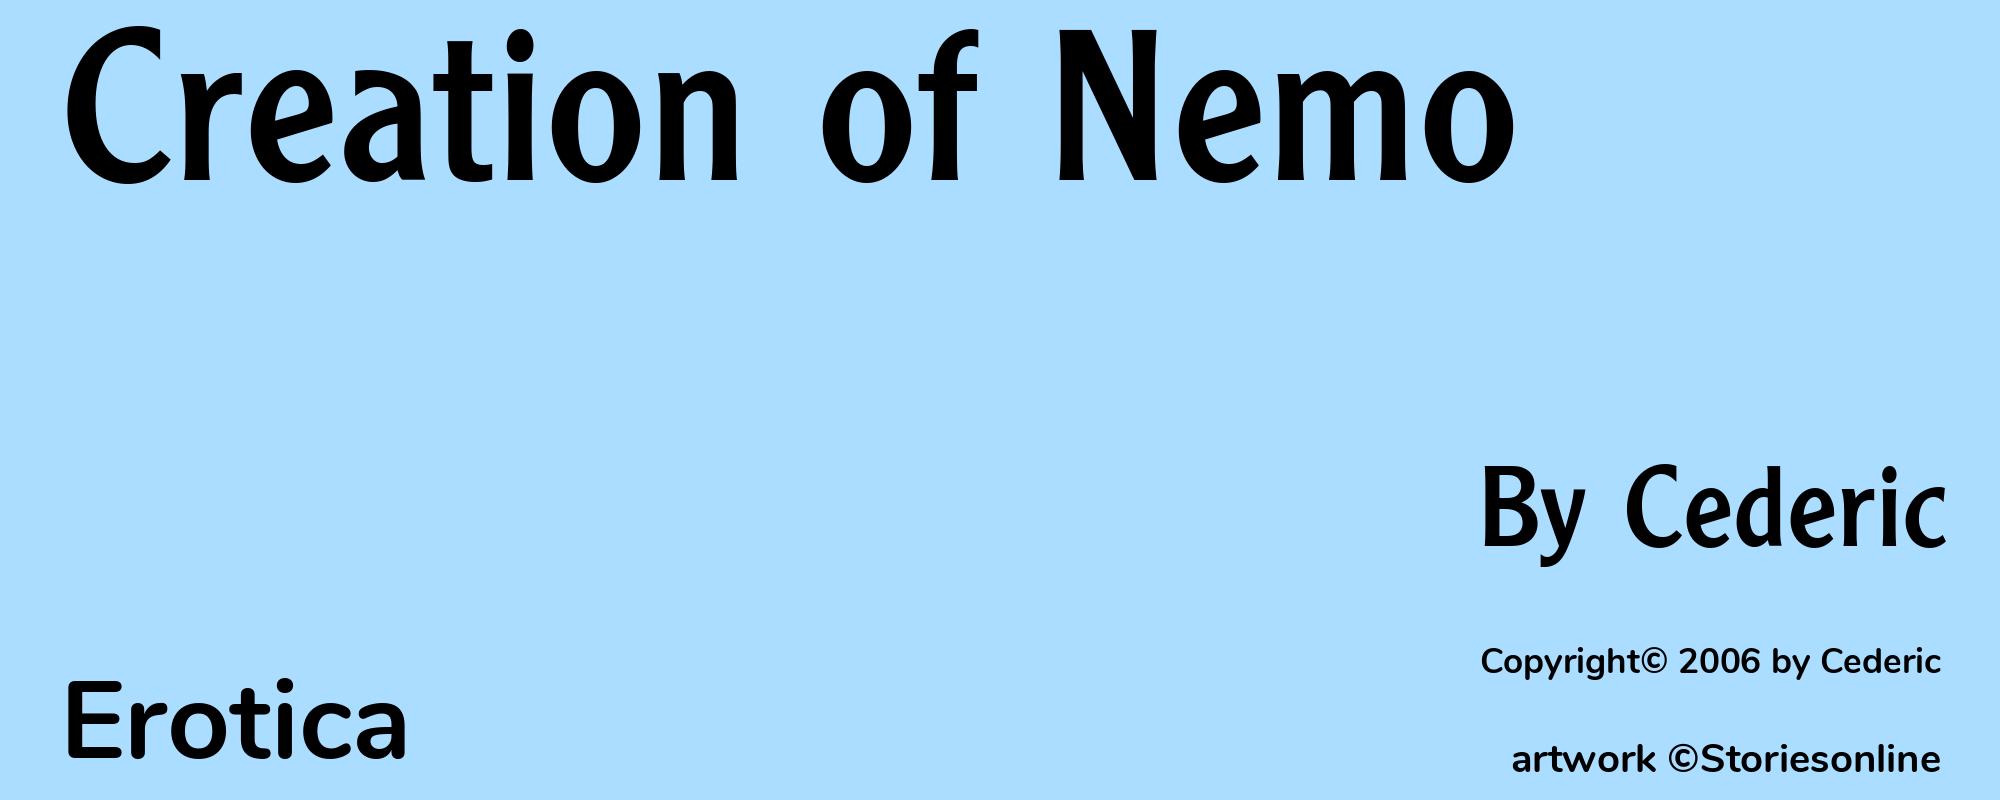 Creation of Nemo - Cover